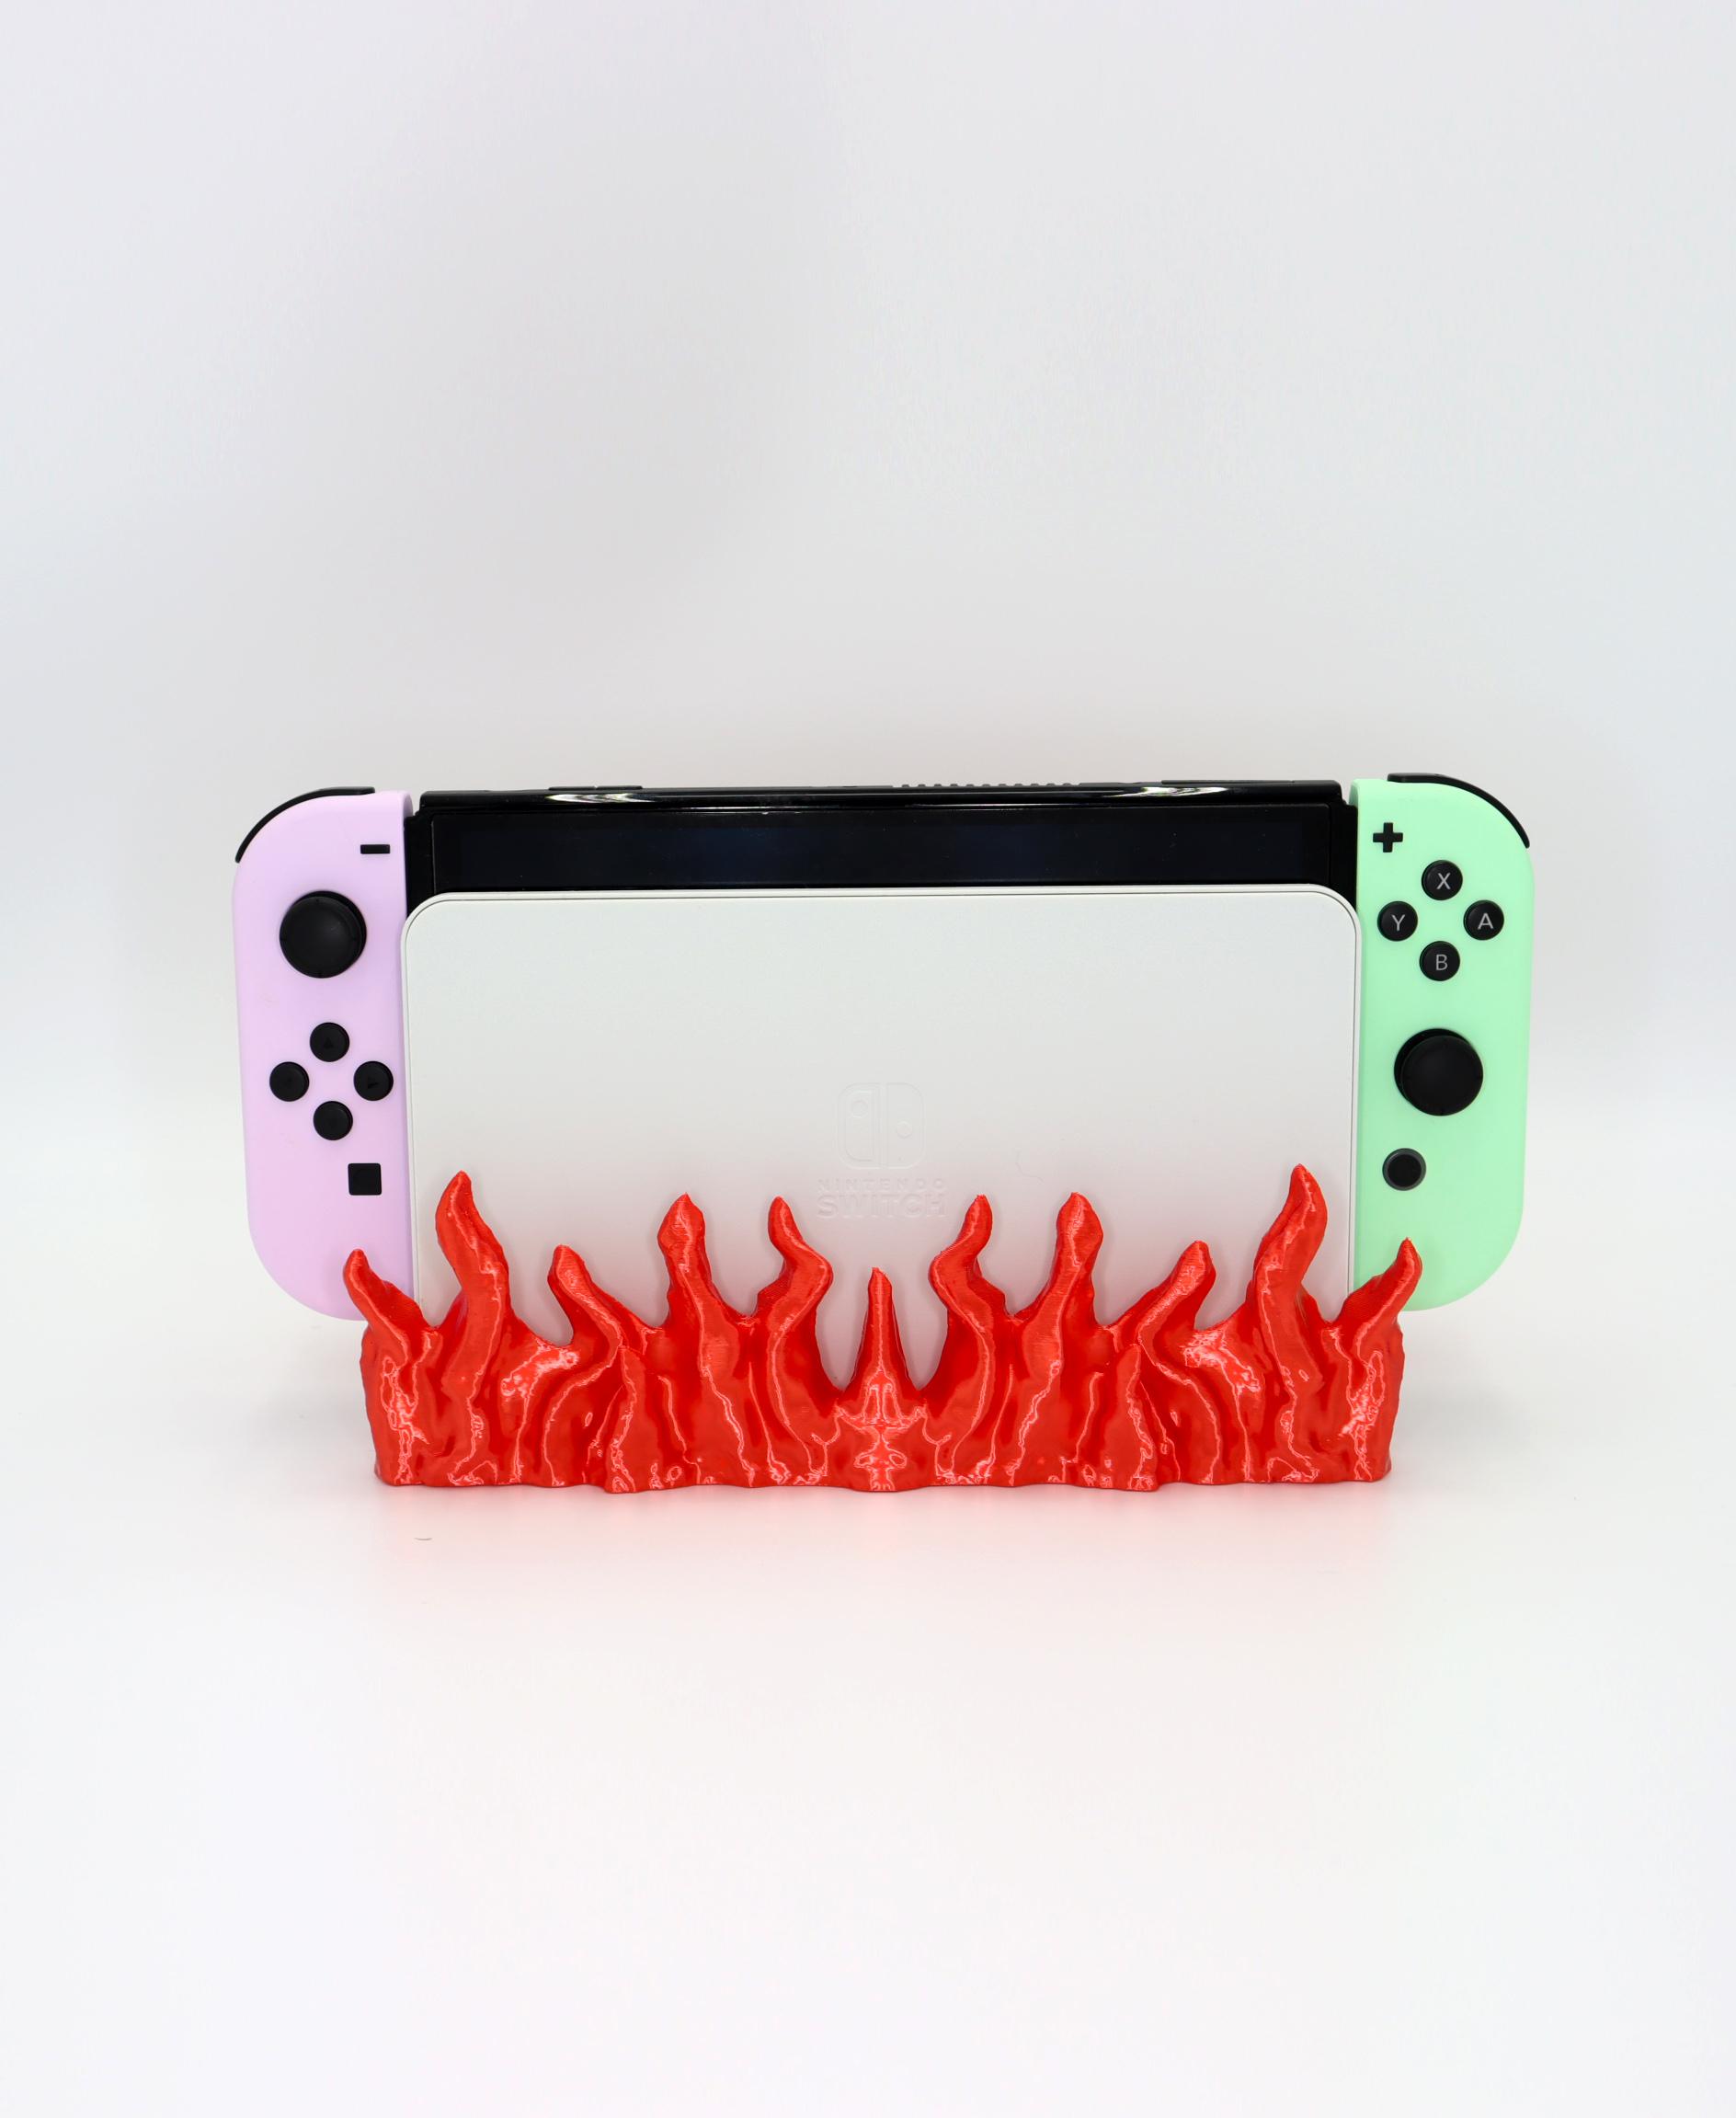 Flame Nintendo switch dock 3d model